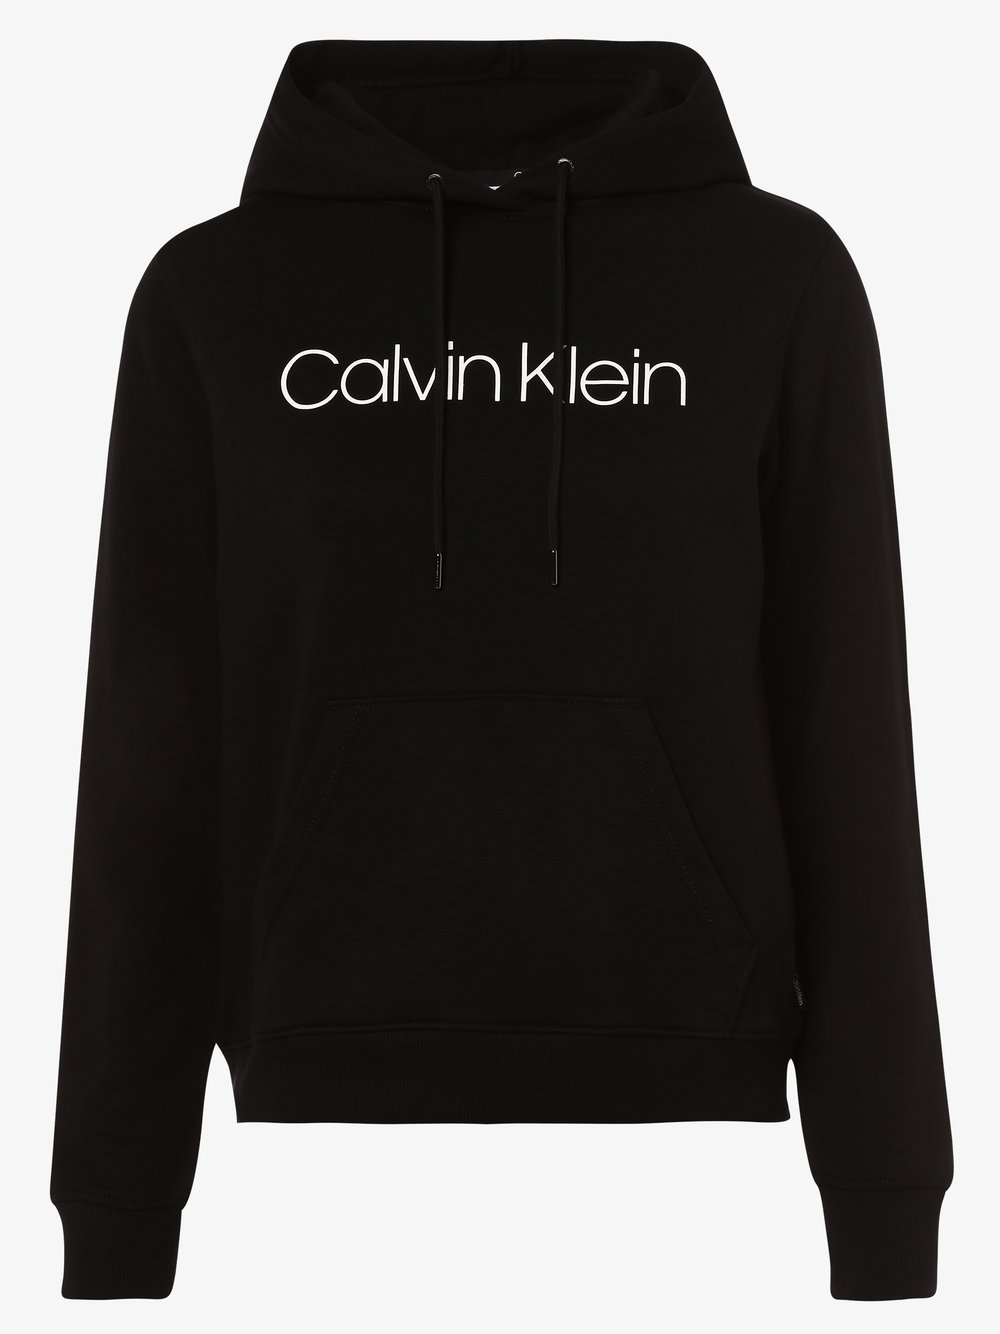 Calvin Klein - Damska bluza z kapturem, czarny LaModa.pl